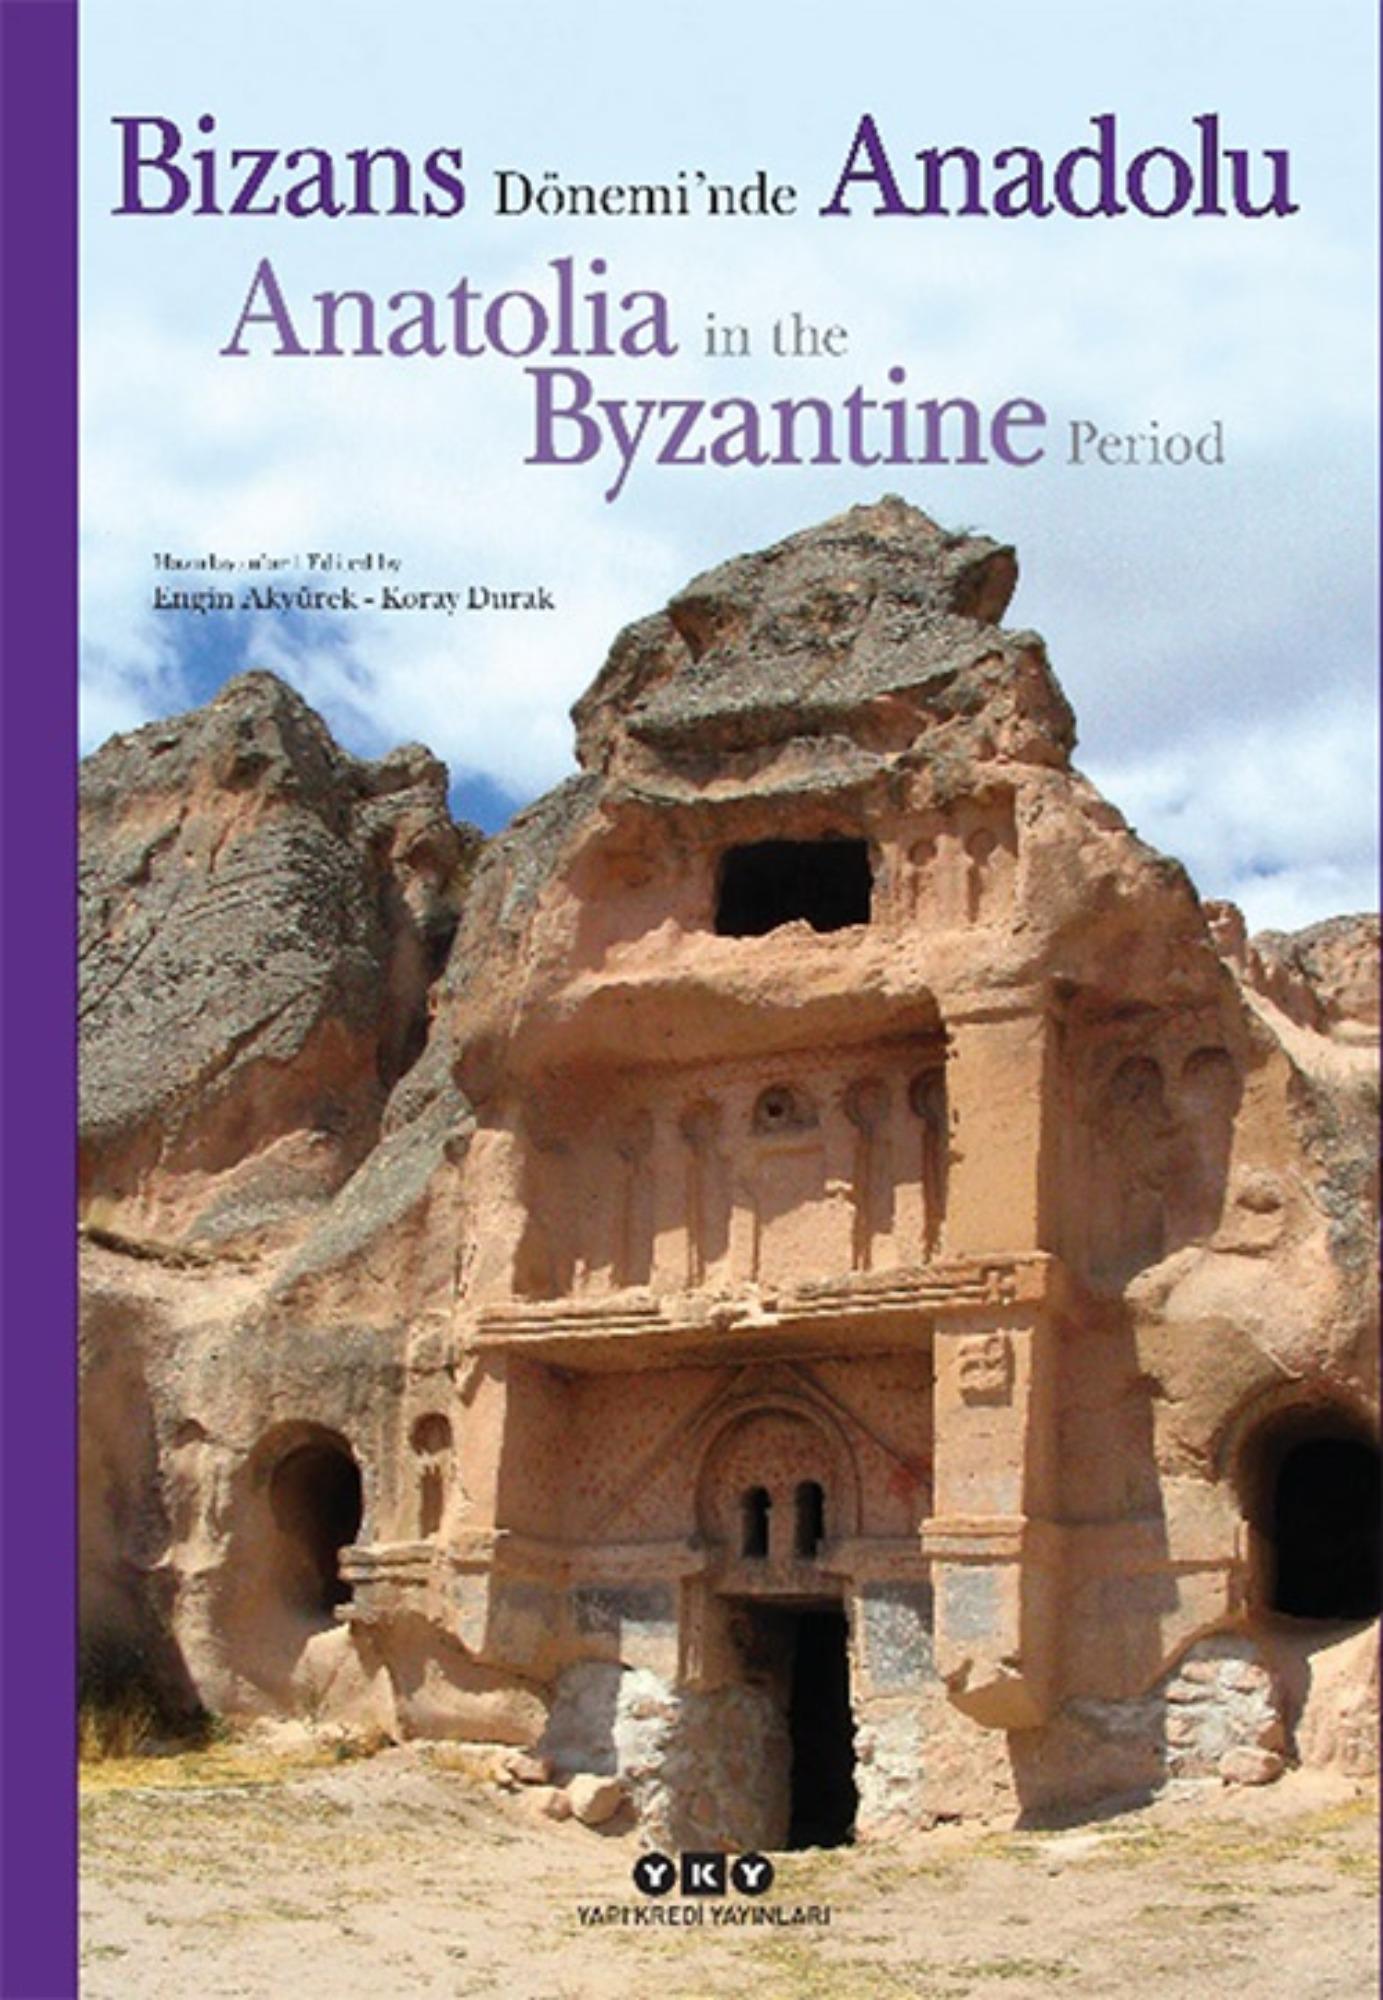 Akyürek, Engin – Koray Durak : Anatolia in the Byzantine Period